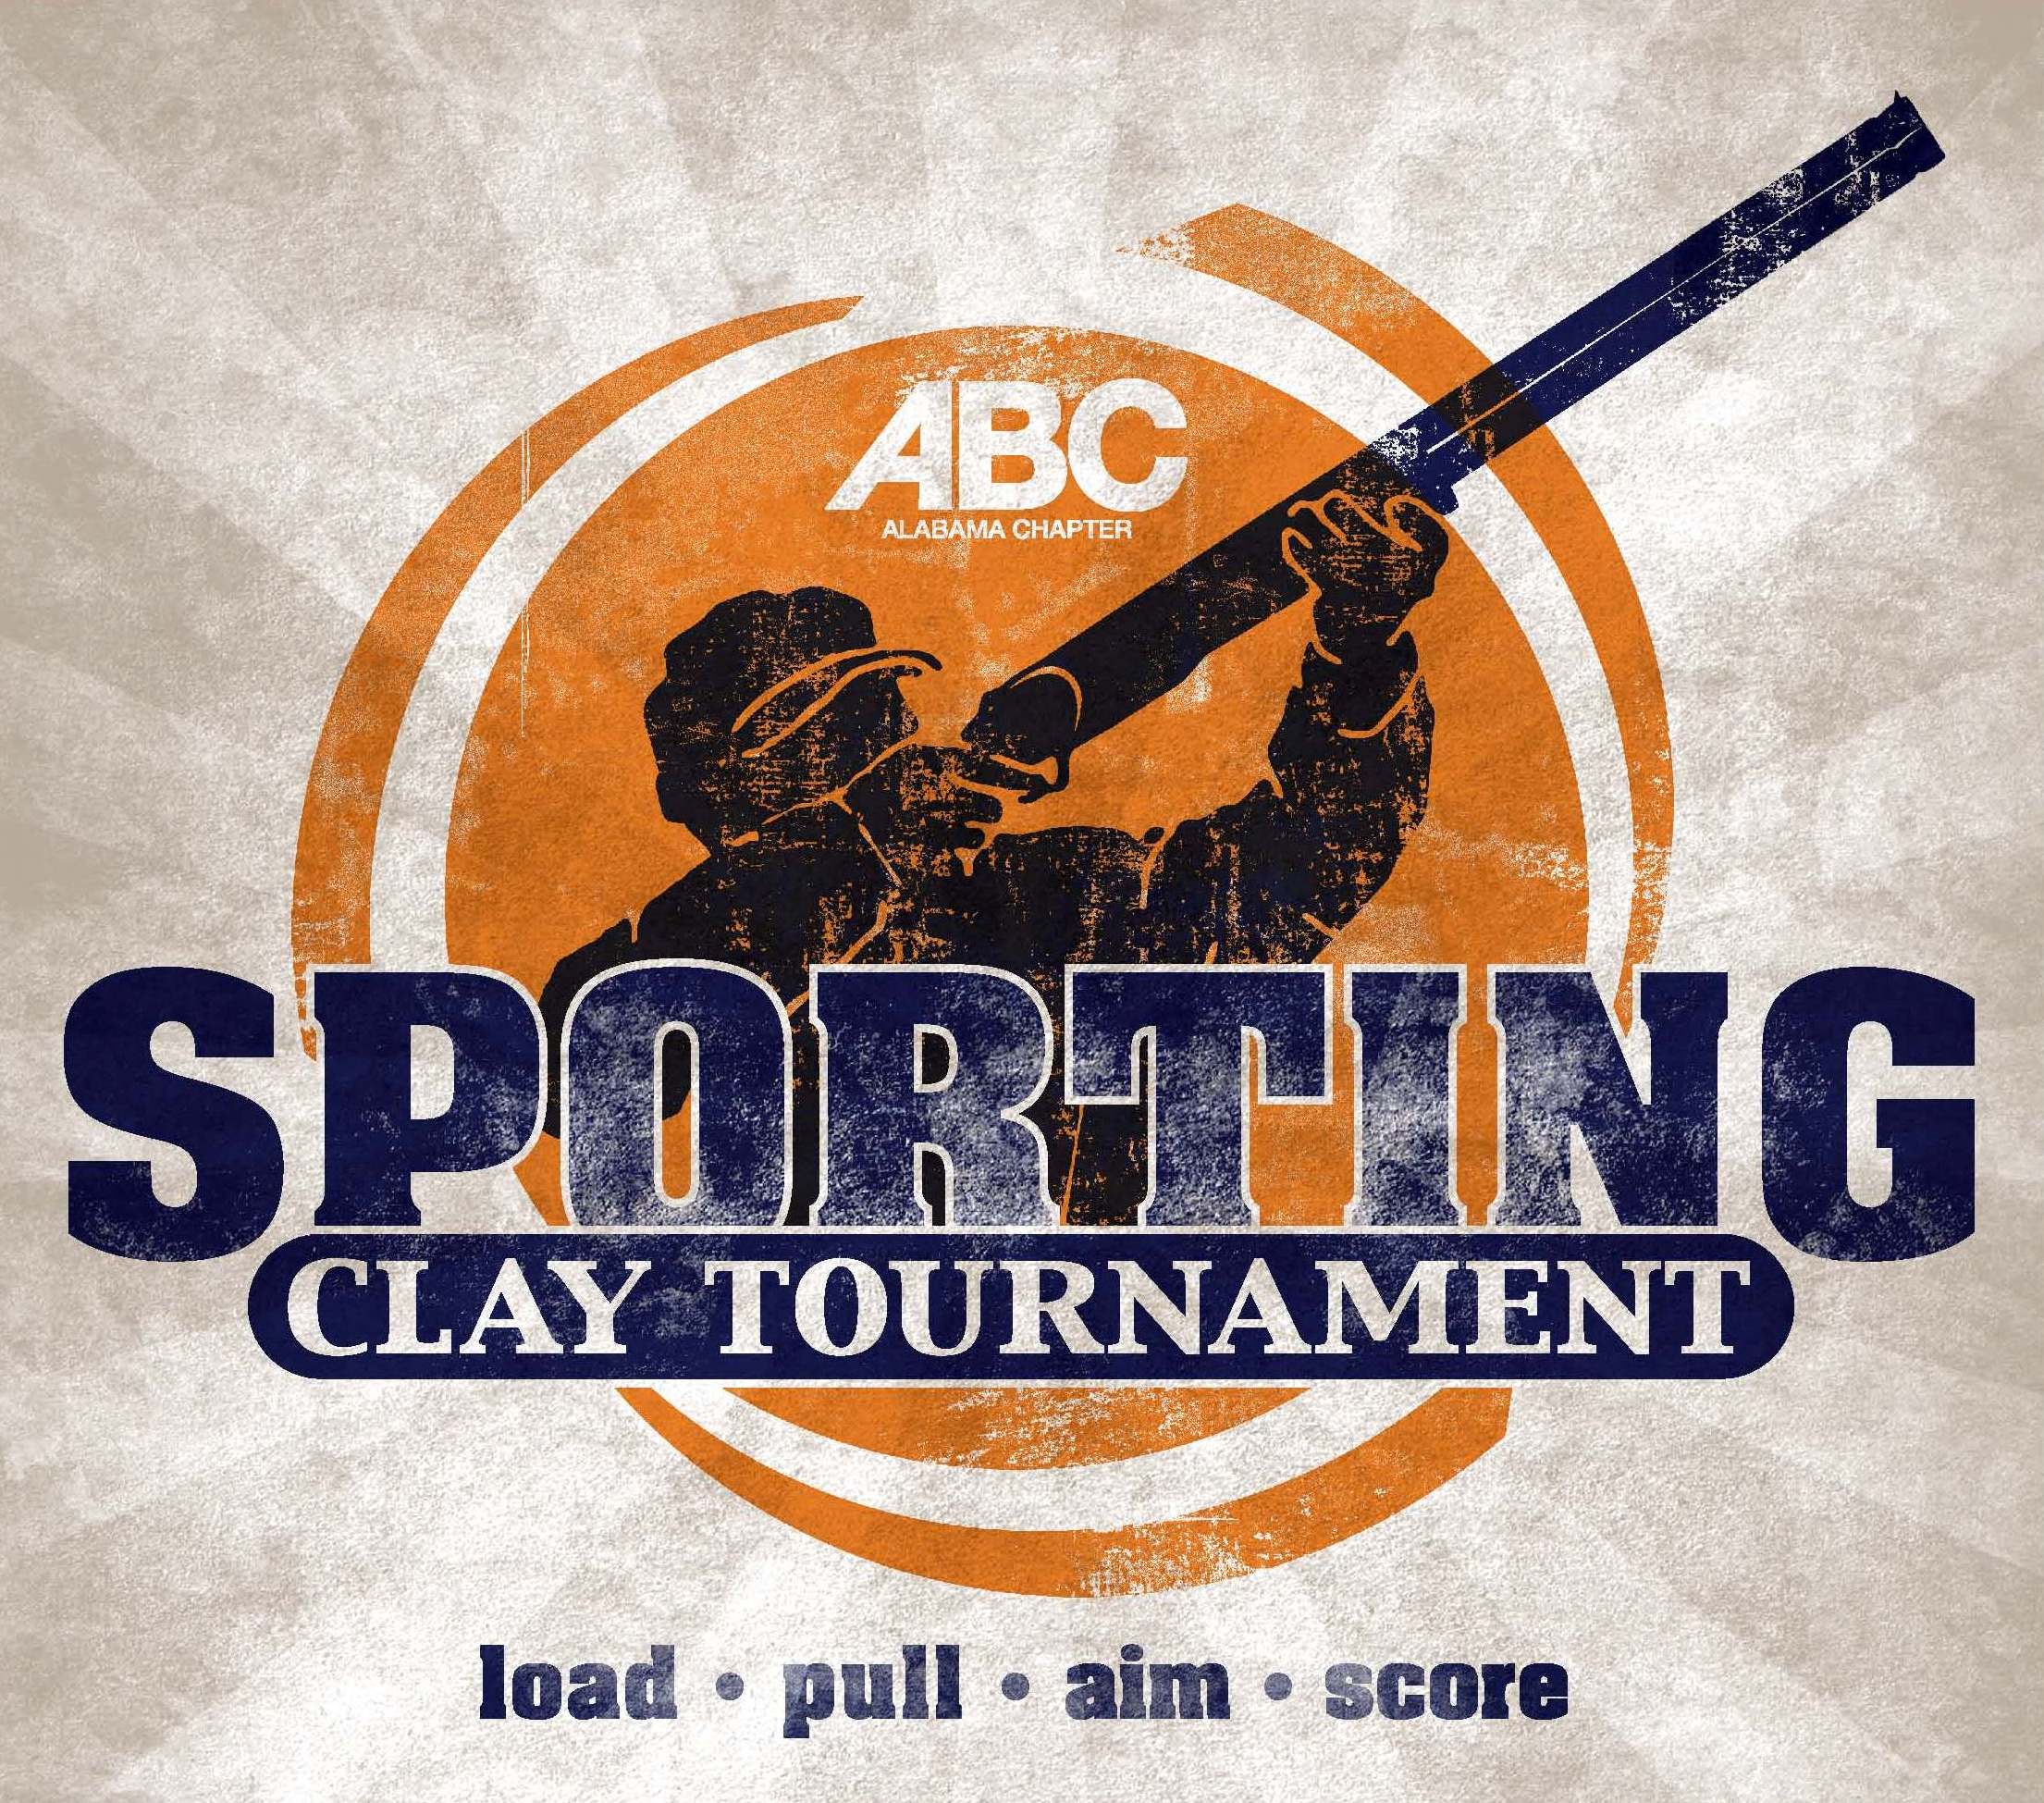 clayshoot logo